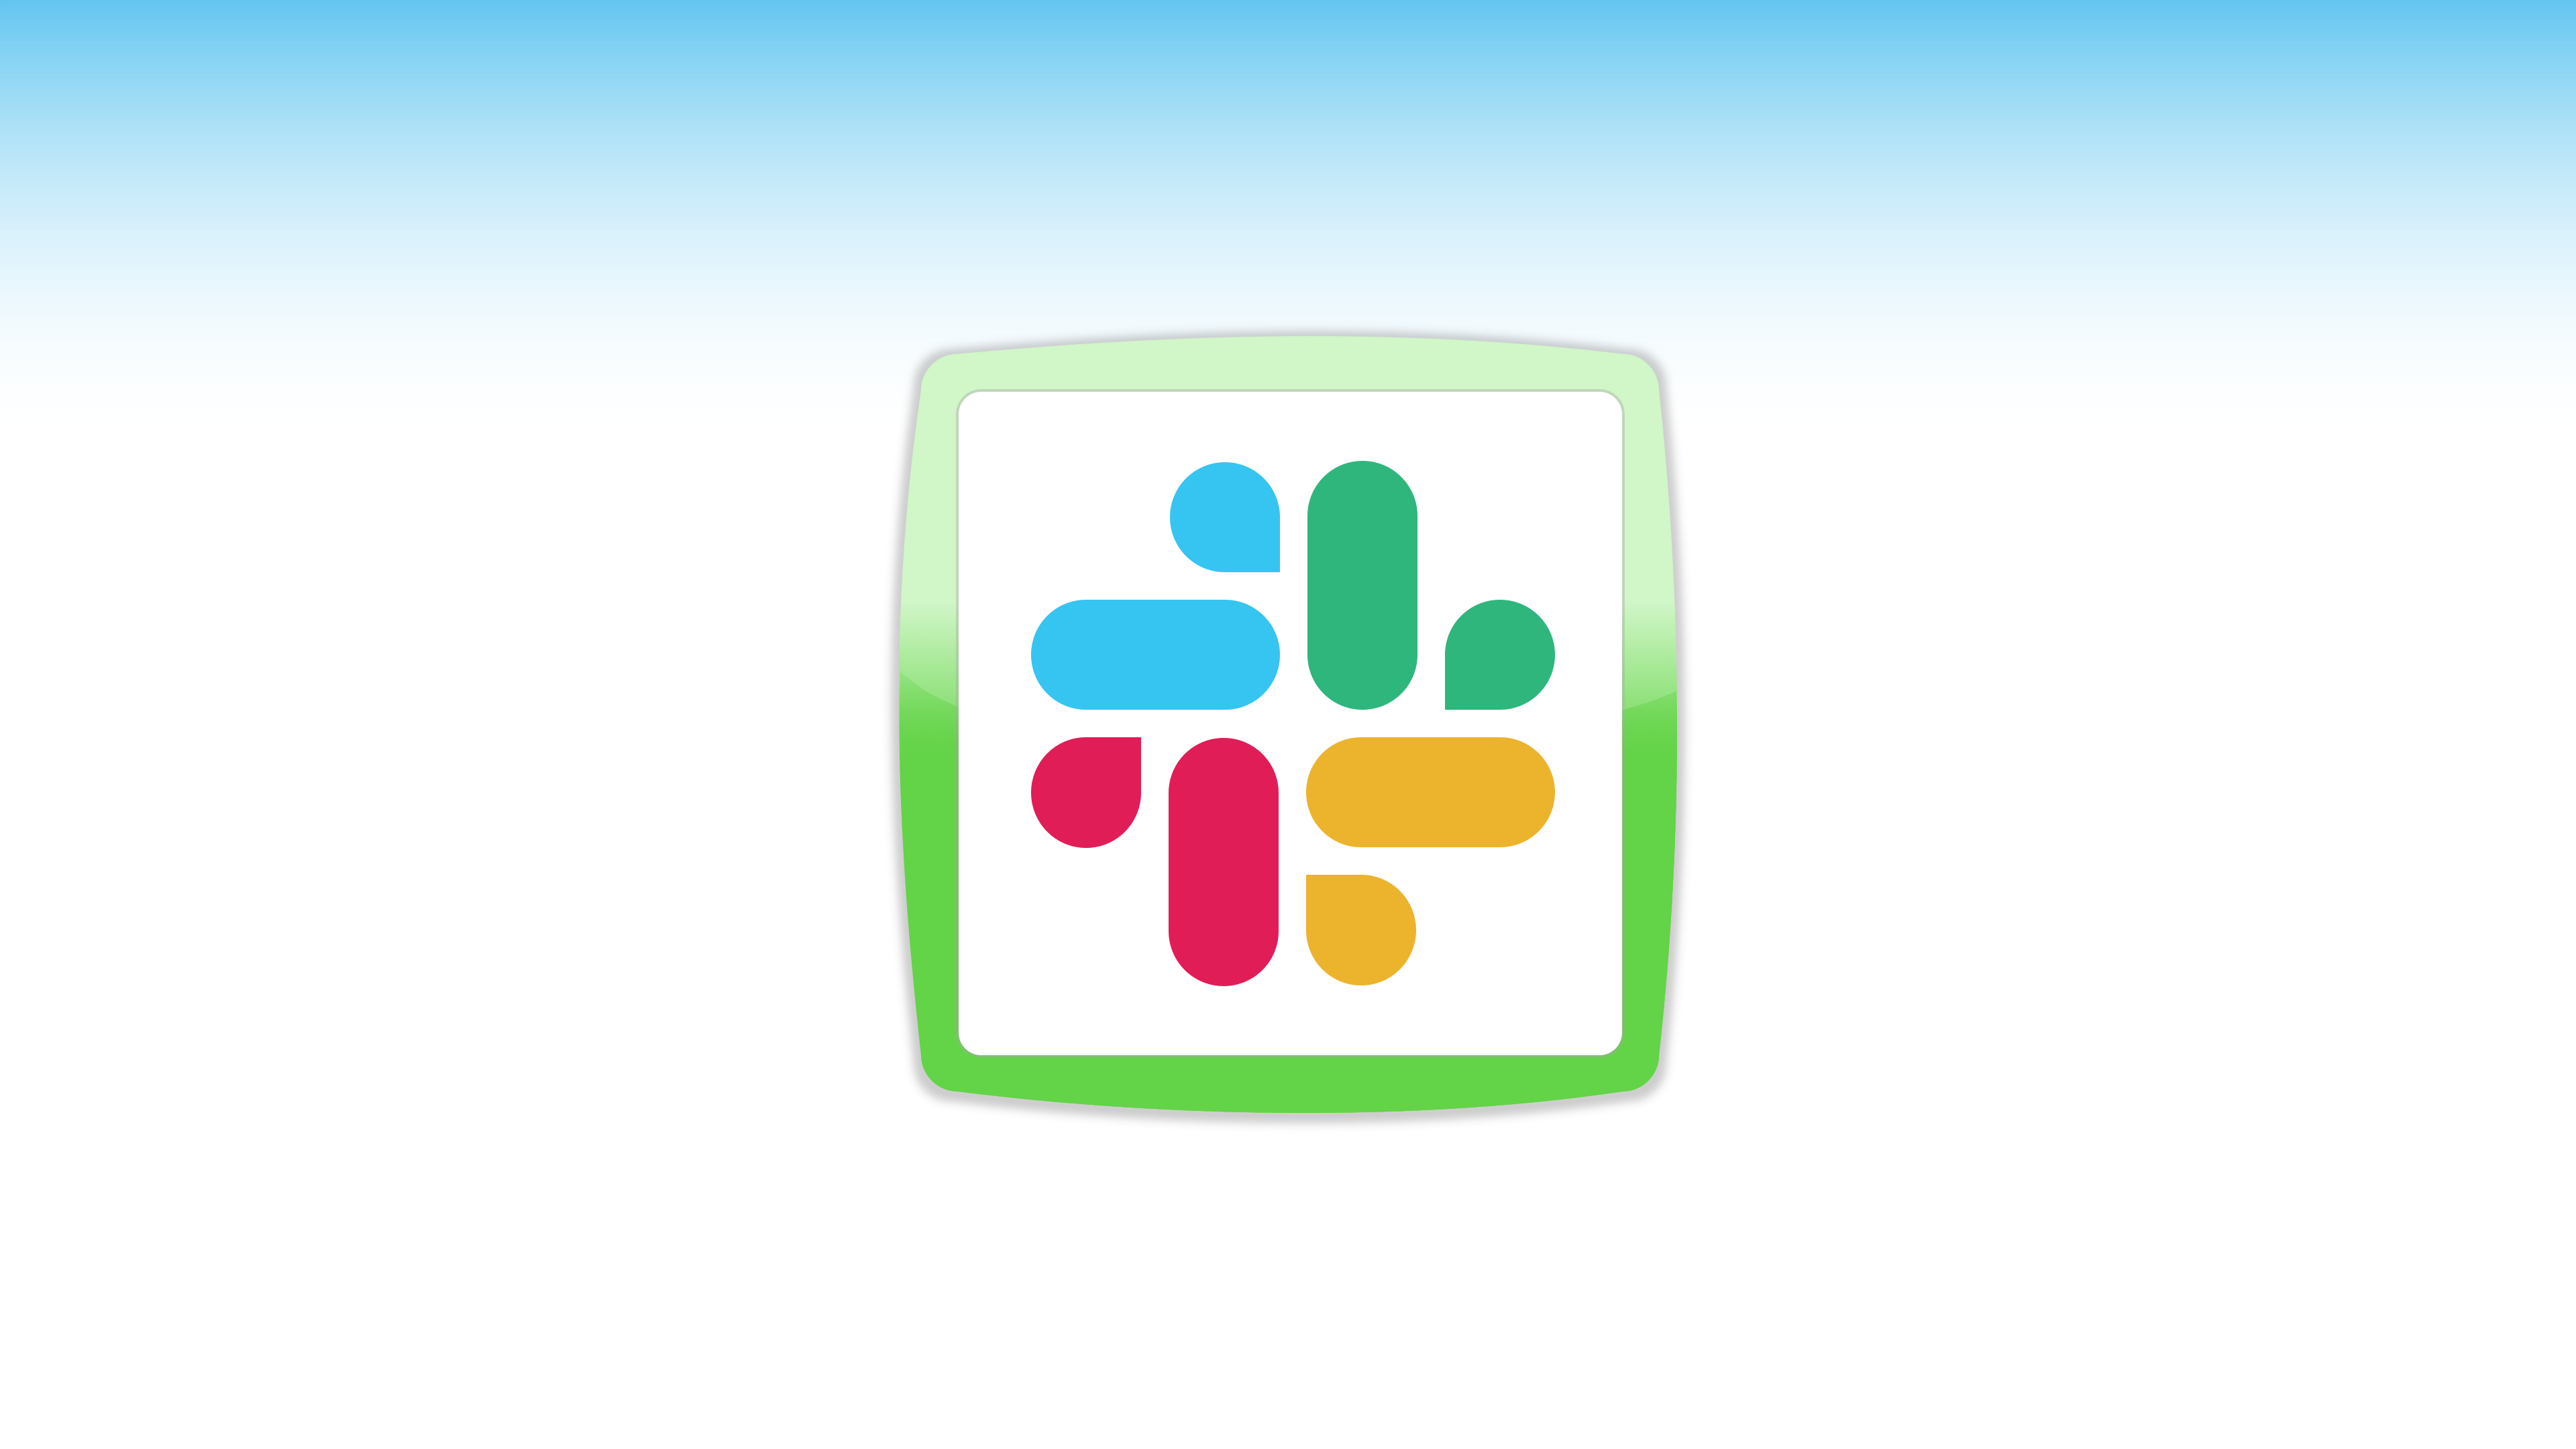 Slack’s logo as a profile picture in Windows Live Messenger